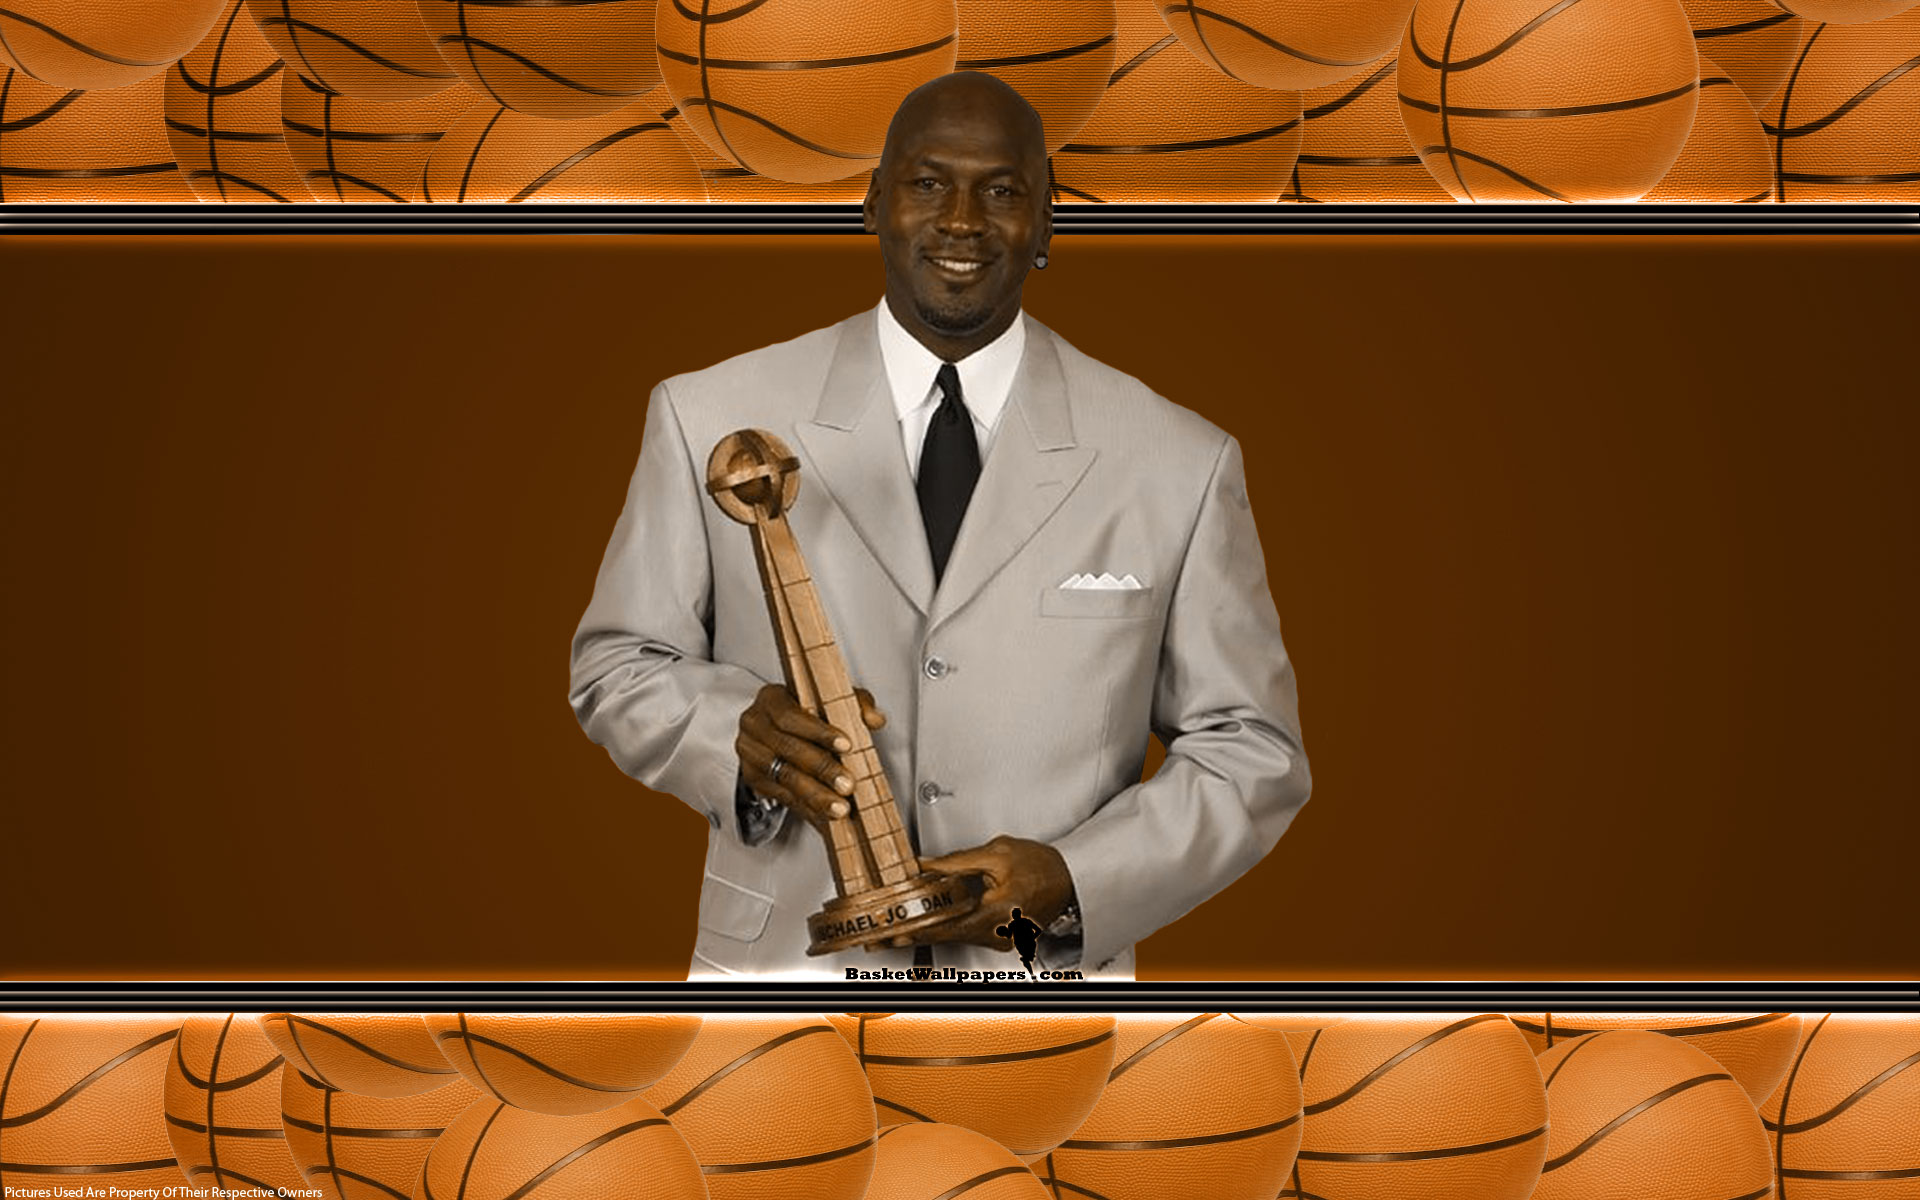 Michael Jordan 2009 Hall Of Fame Widescreen Wallpaper | Basketball Wallpapers at ...1920 x 1200